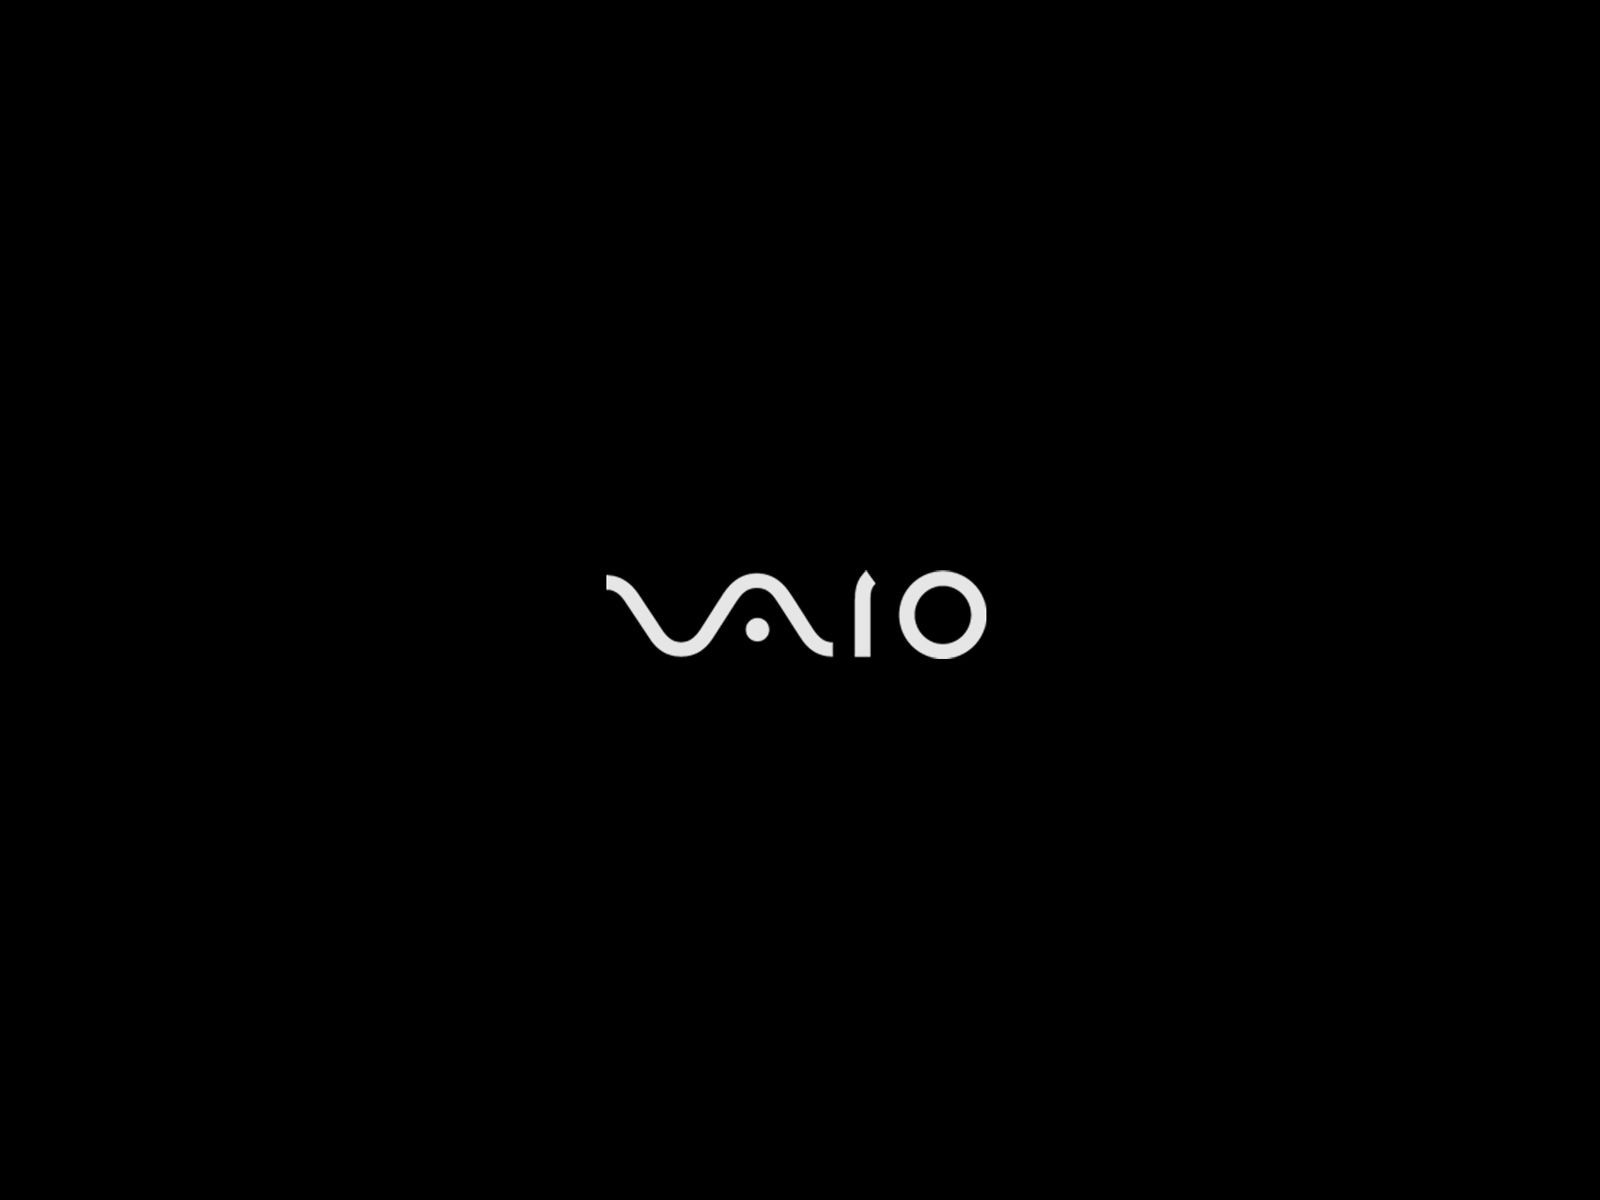 Vaio Black for 1600 x 1200 resolution